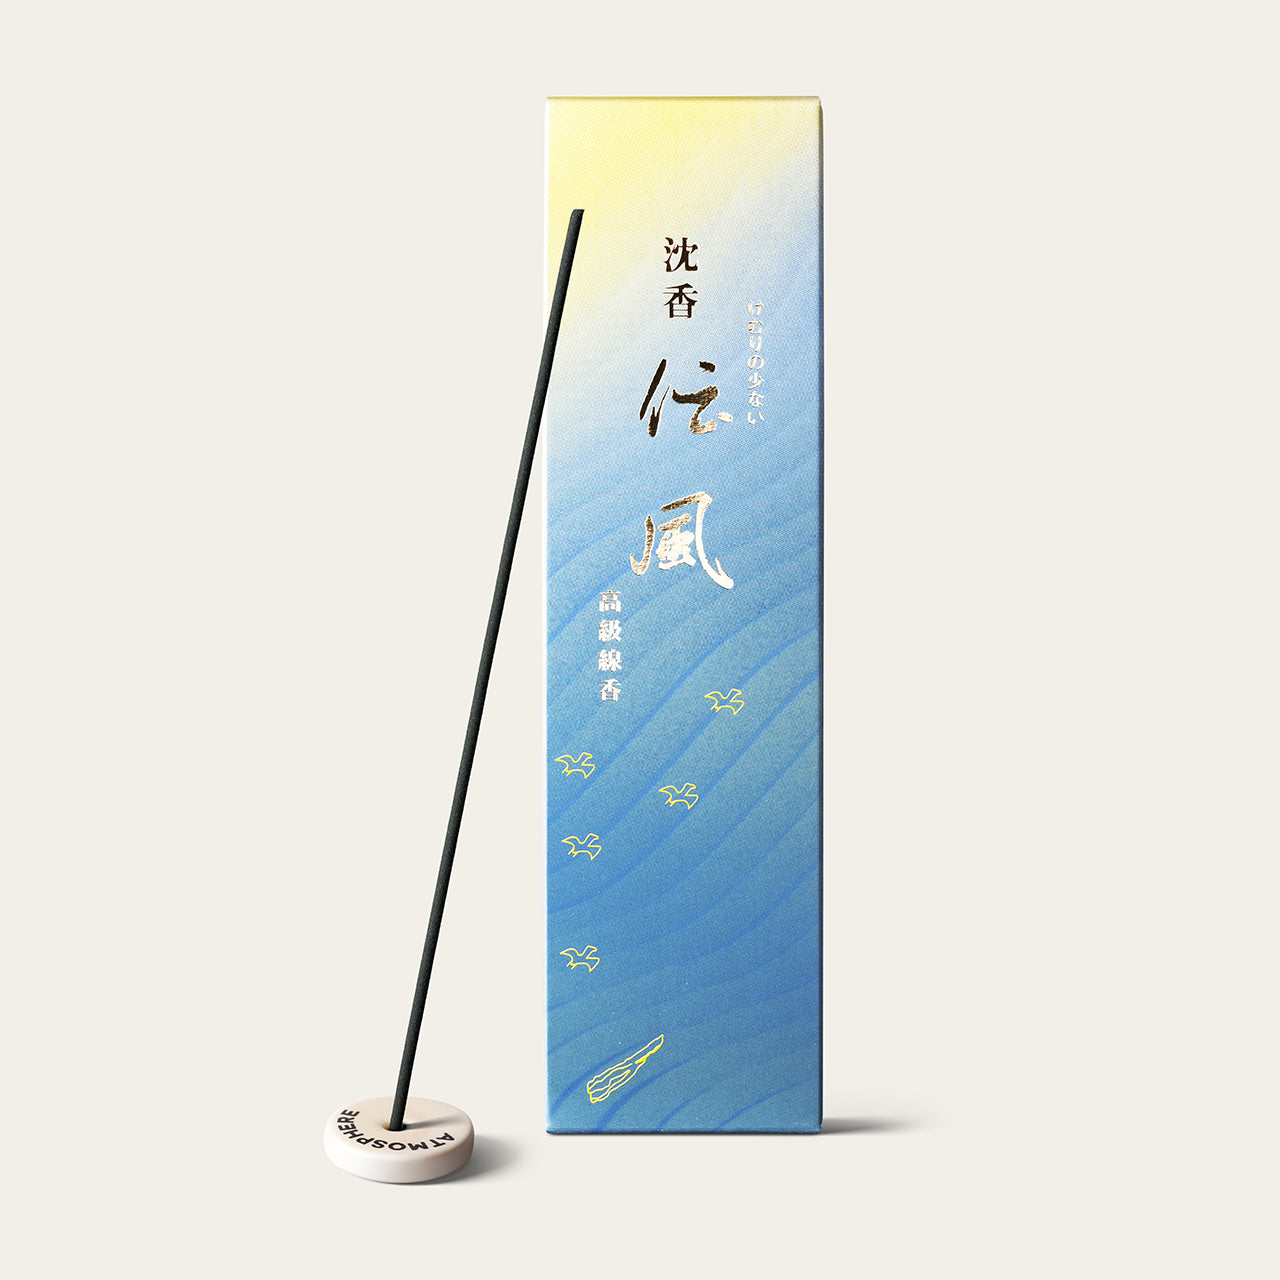 Gyokushodo Jinko Denpu Agarwood Instilment Japanese incense sticks (25 sticks) with Atmosphere ceramic incense holder